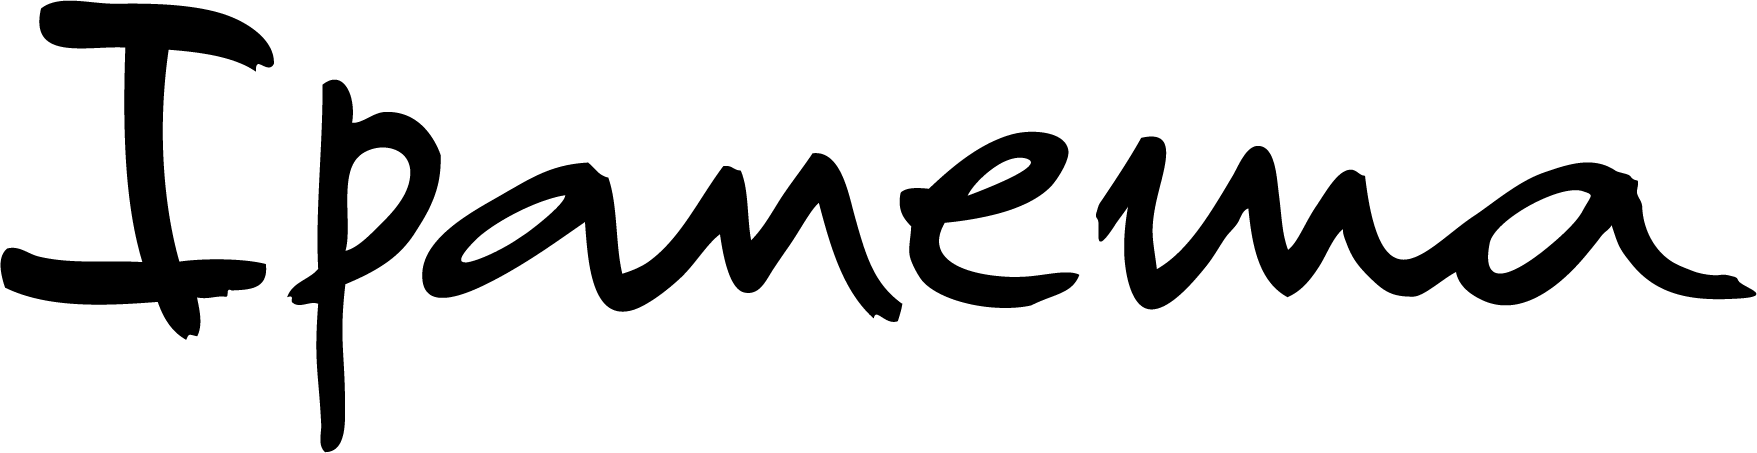 Ipanema Logo BLK.png